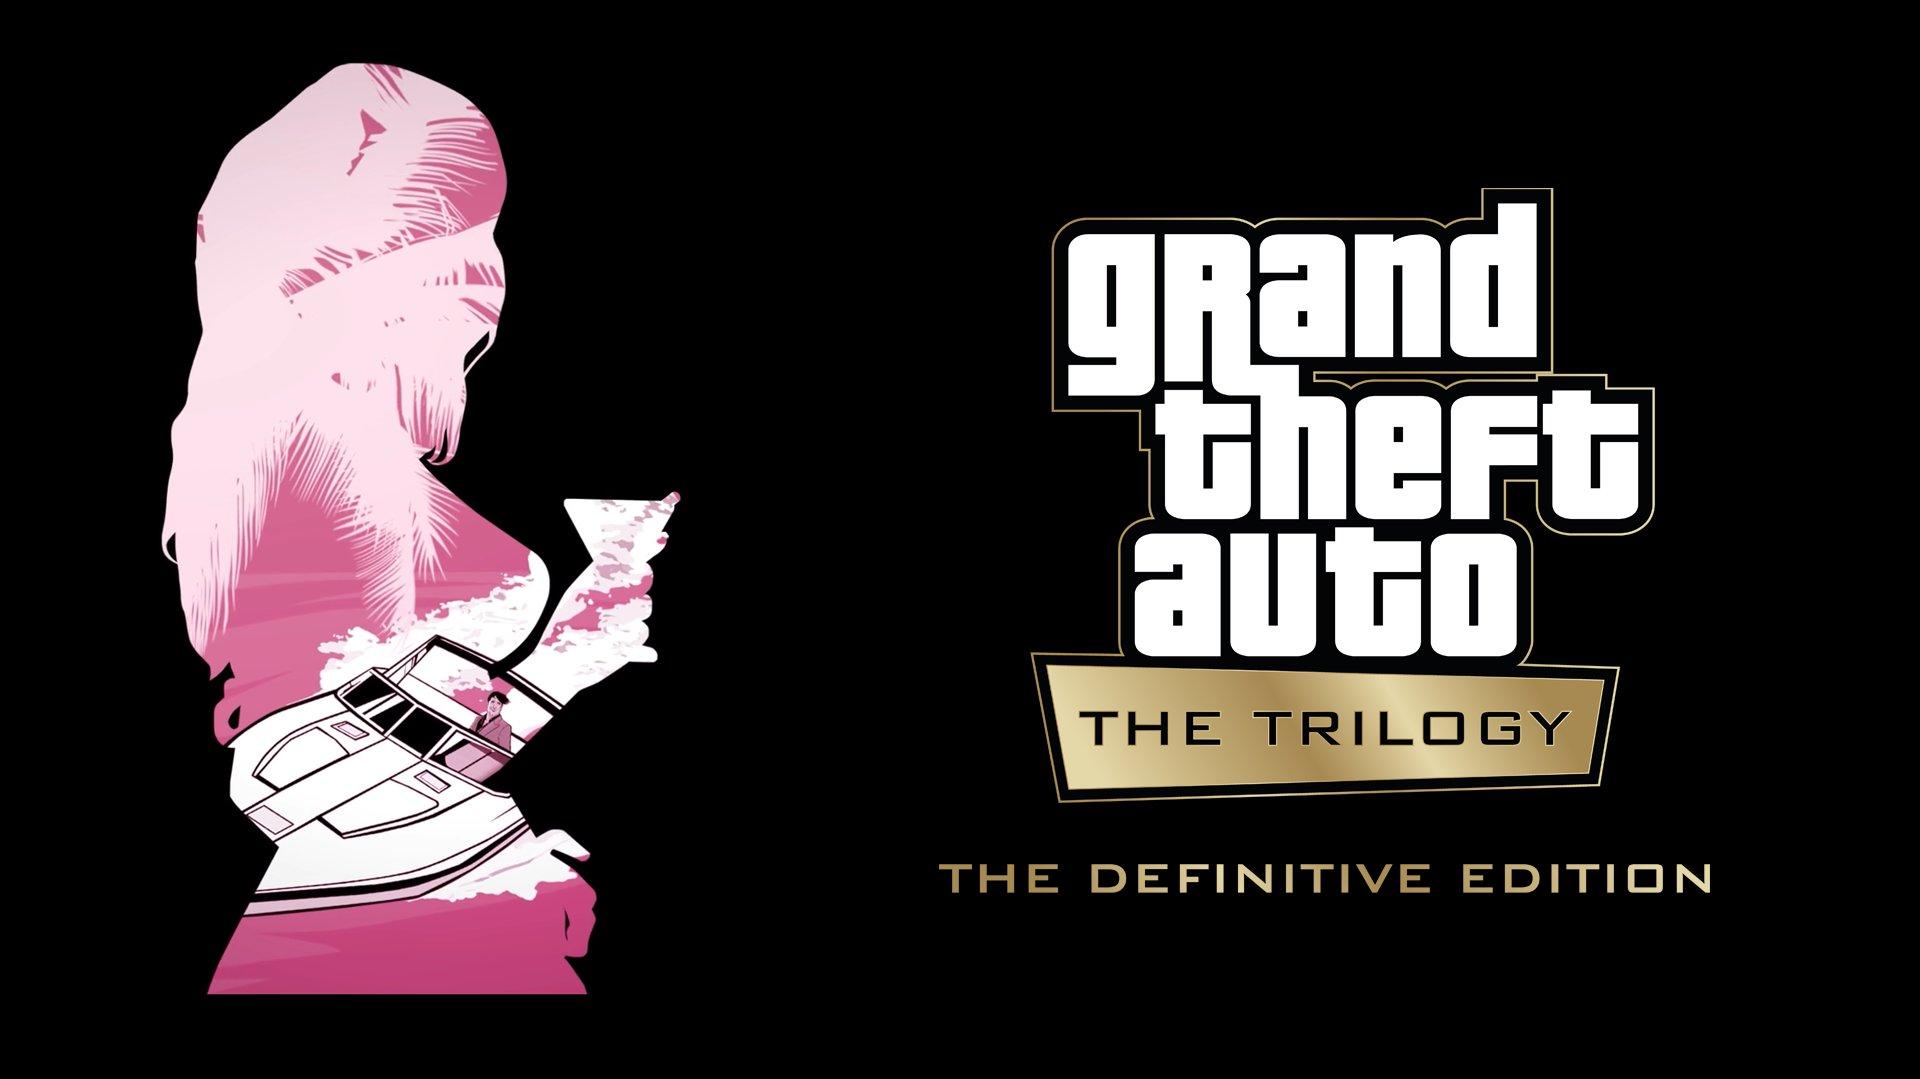 Grand Theft Auto Vice City HD Wallpaper